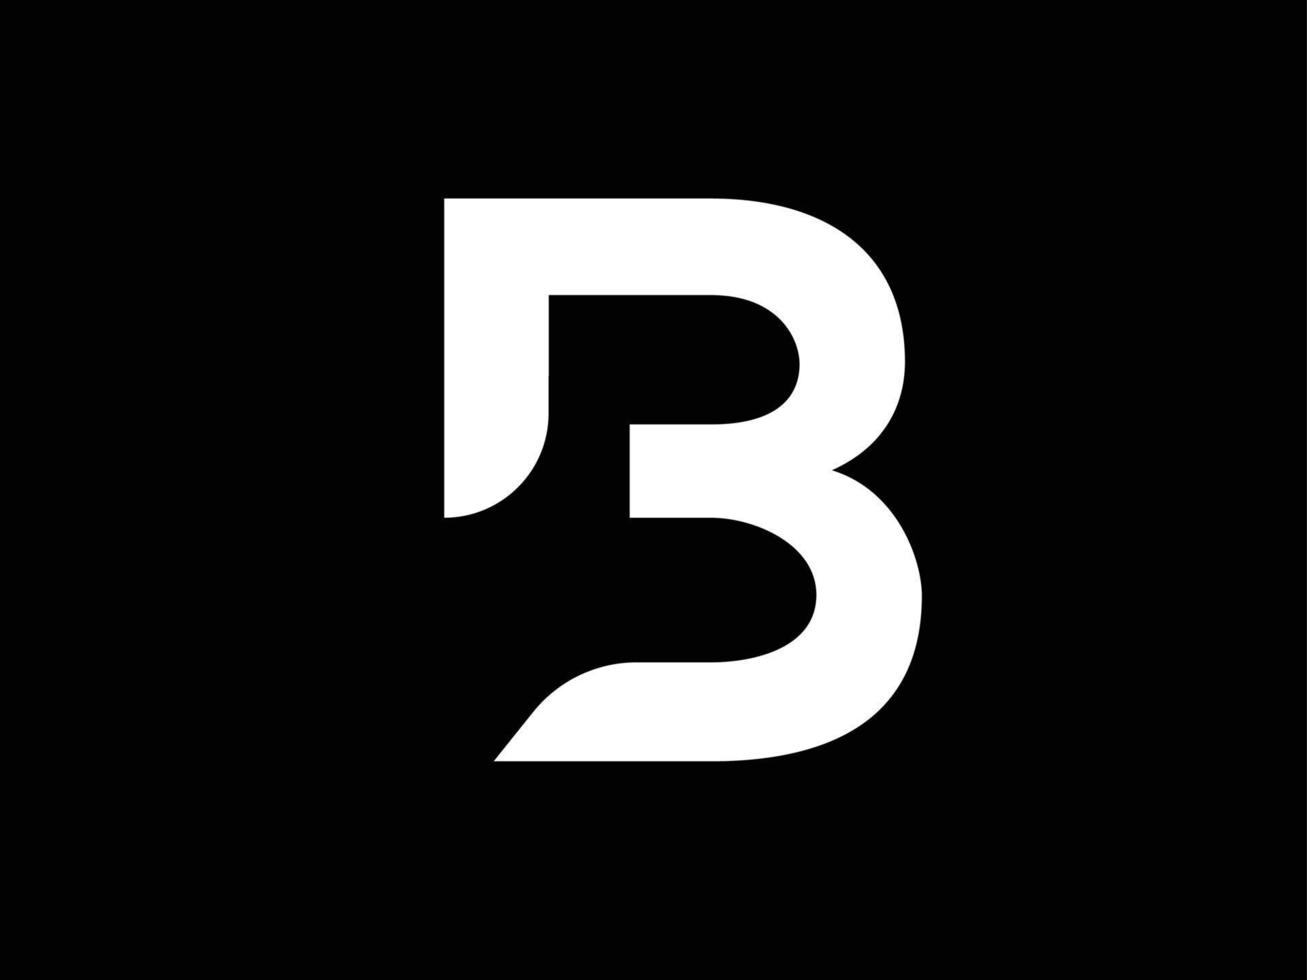 bianco e nero b. vettore di logo b moderno. logo b maiuscola